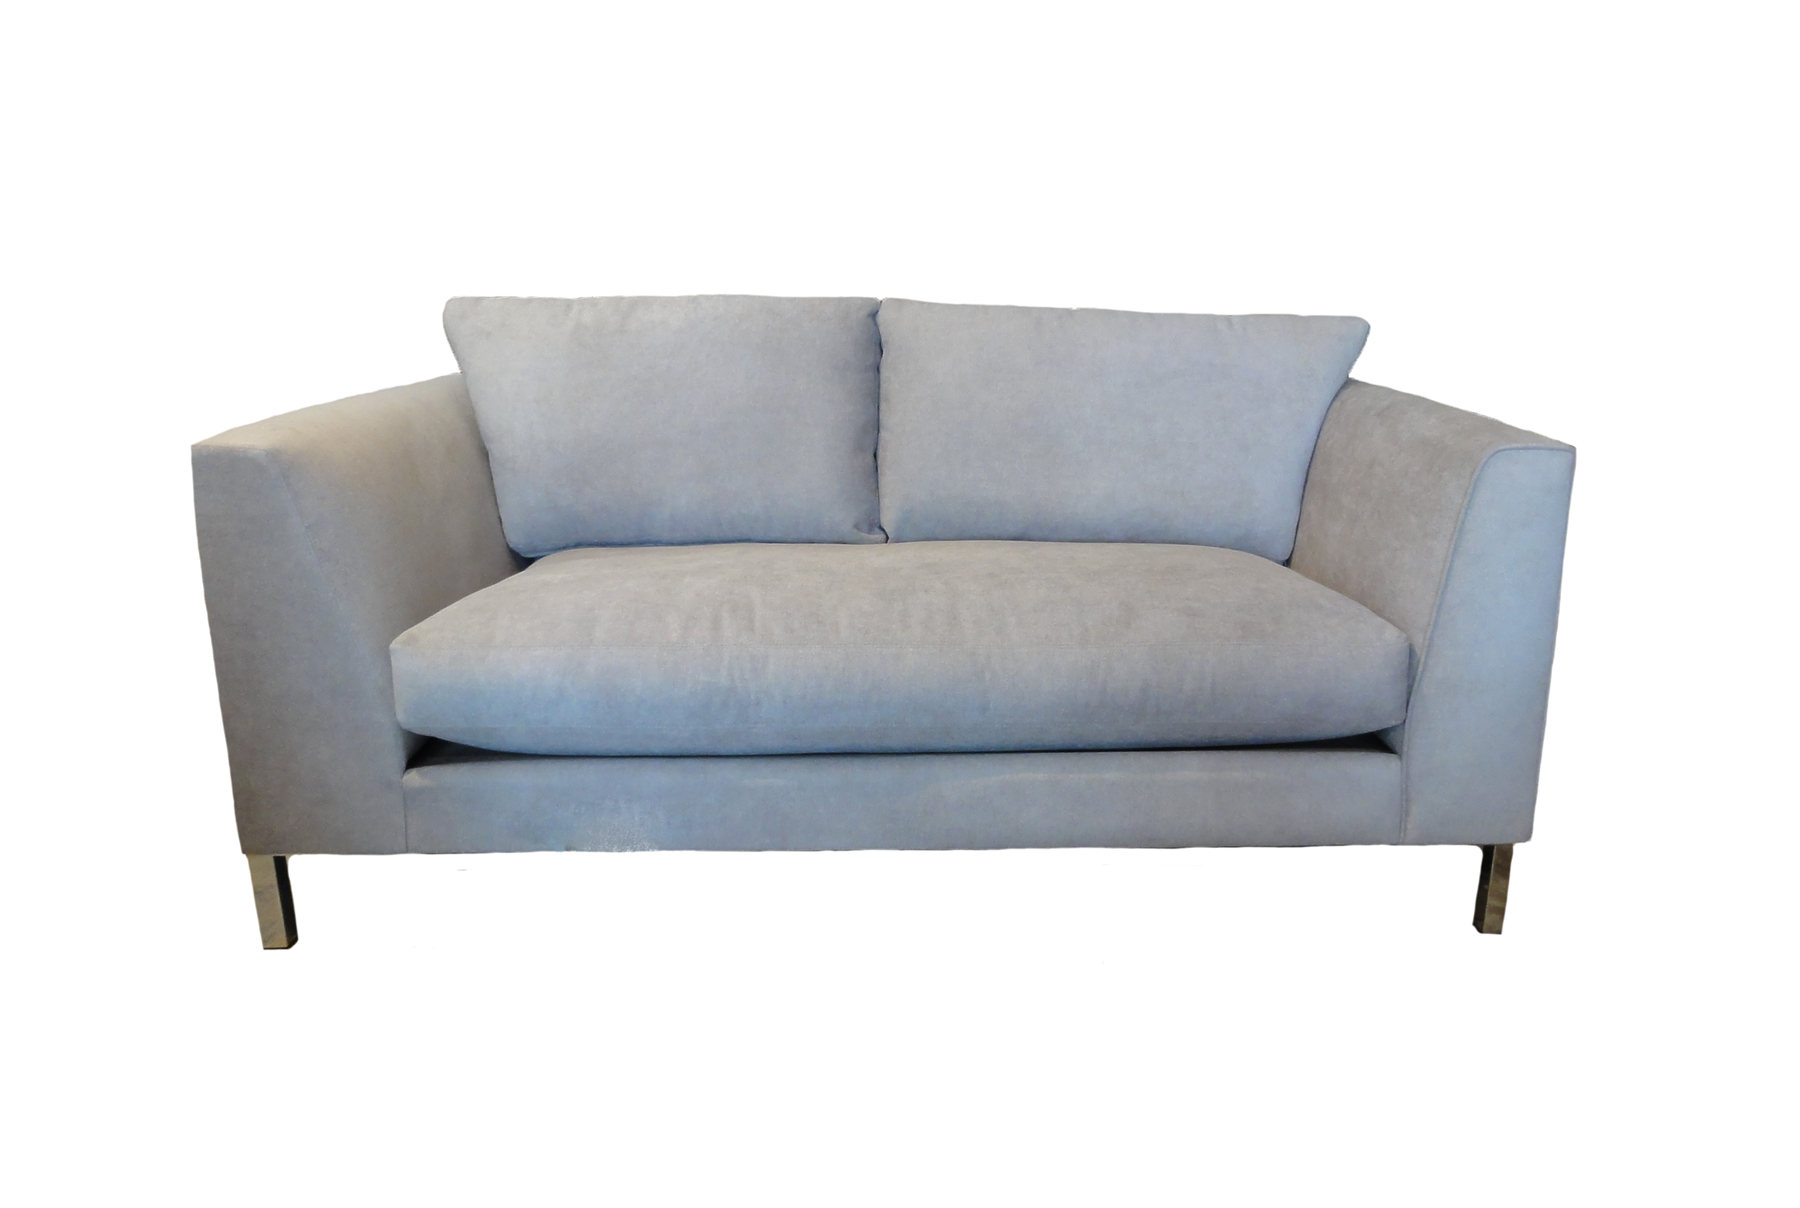 madelyyn loveseat sofa couch sectional sleeper sofa santa barbara design center rugs